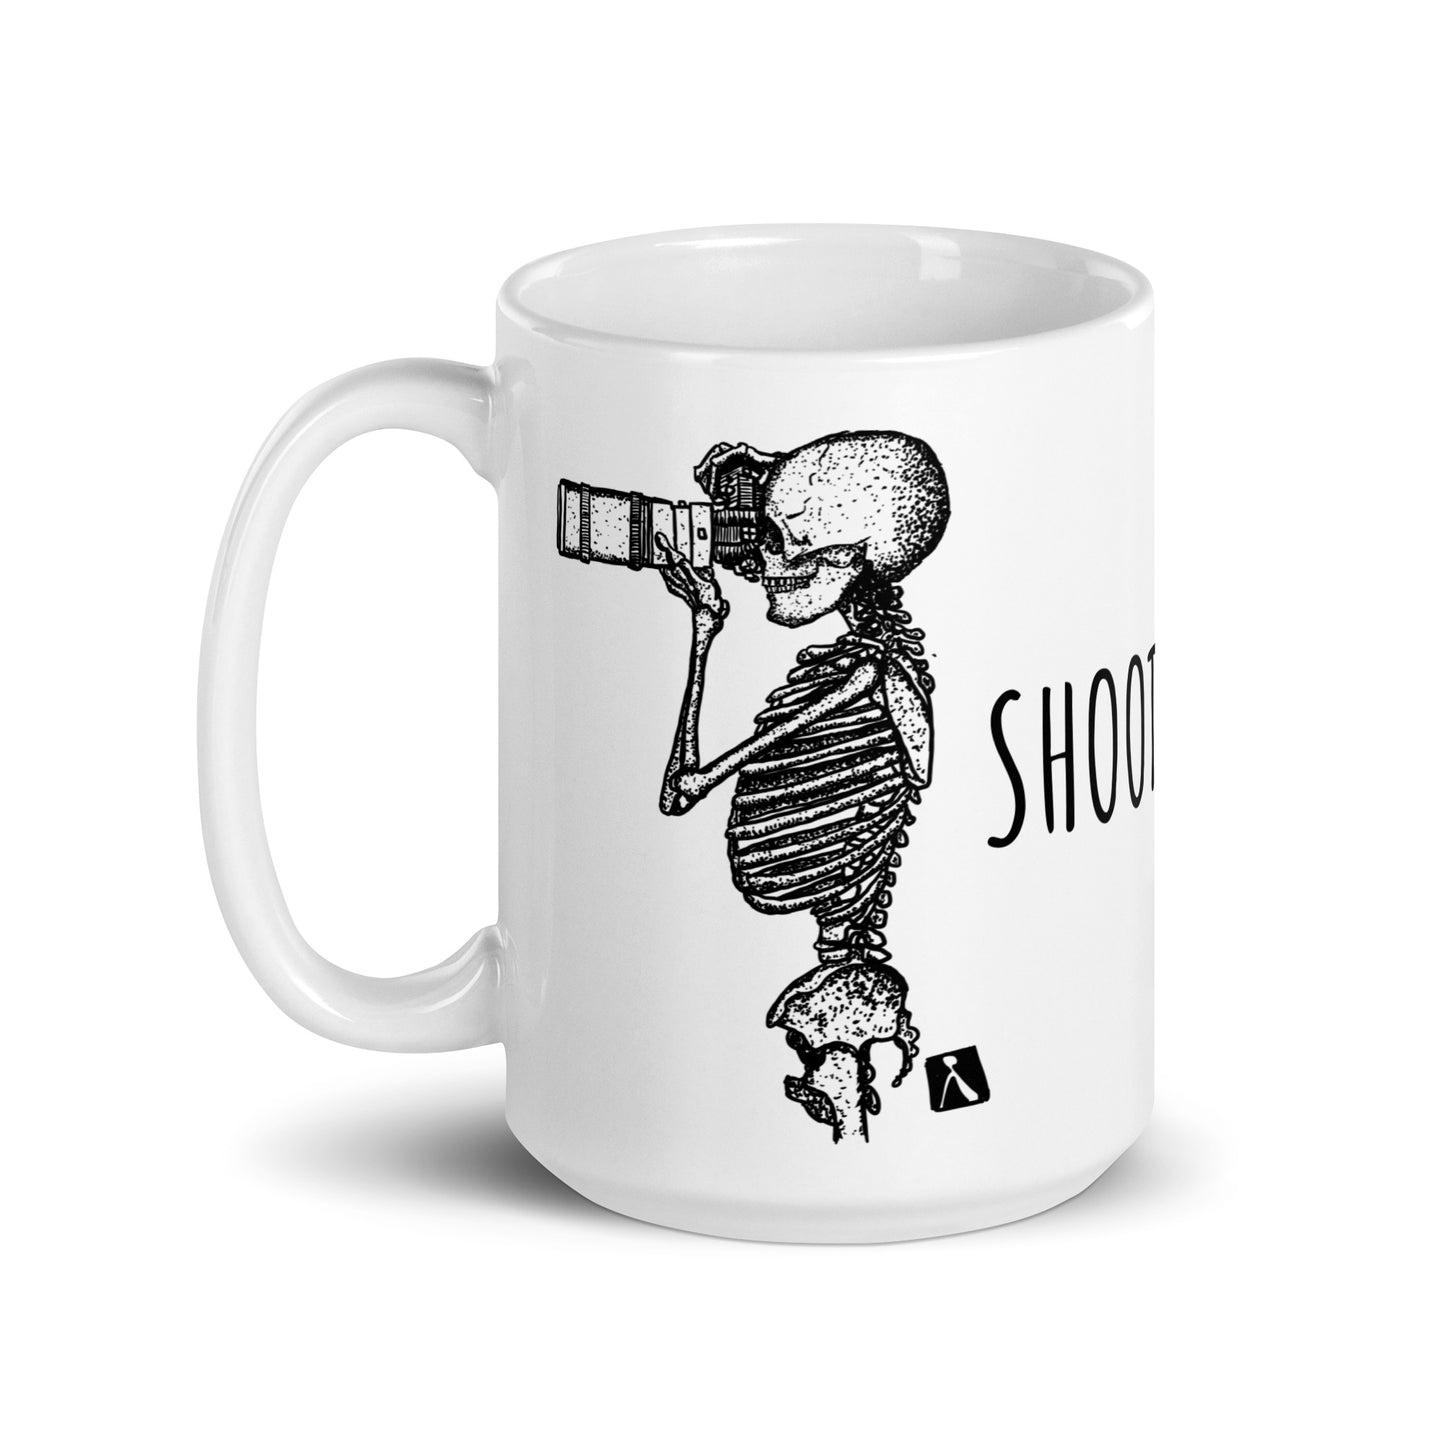 BellavanceInk: Coffee Mug With Pen & Ink Drawing Of A Skeleton Shooting With Their Camera